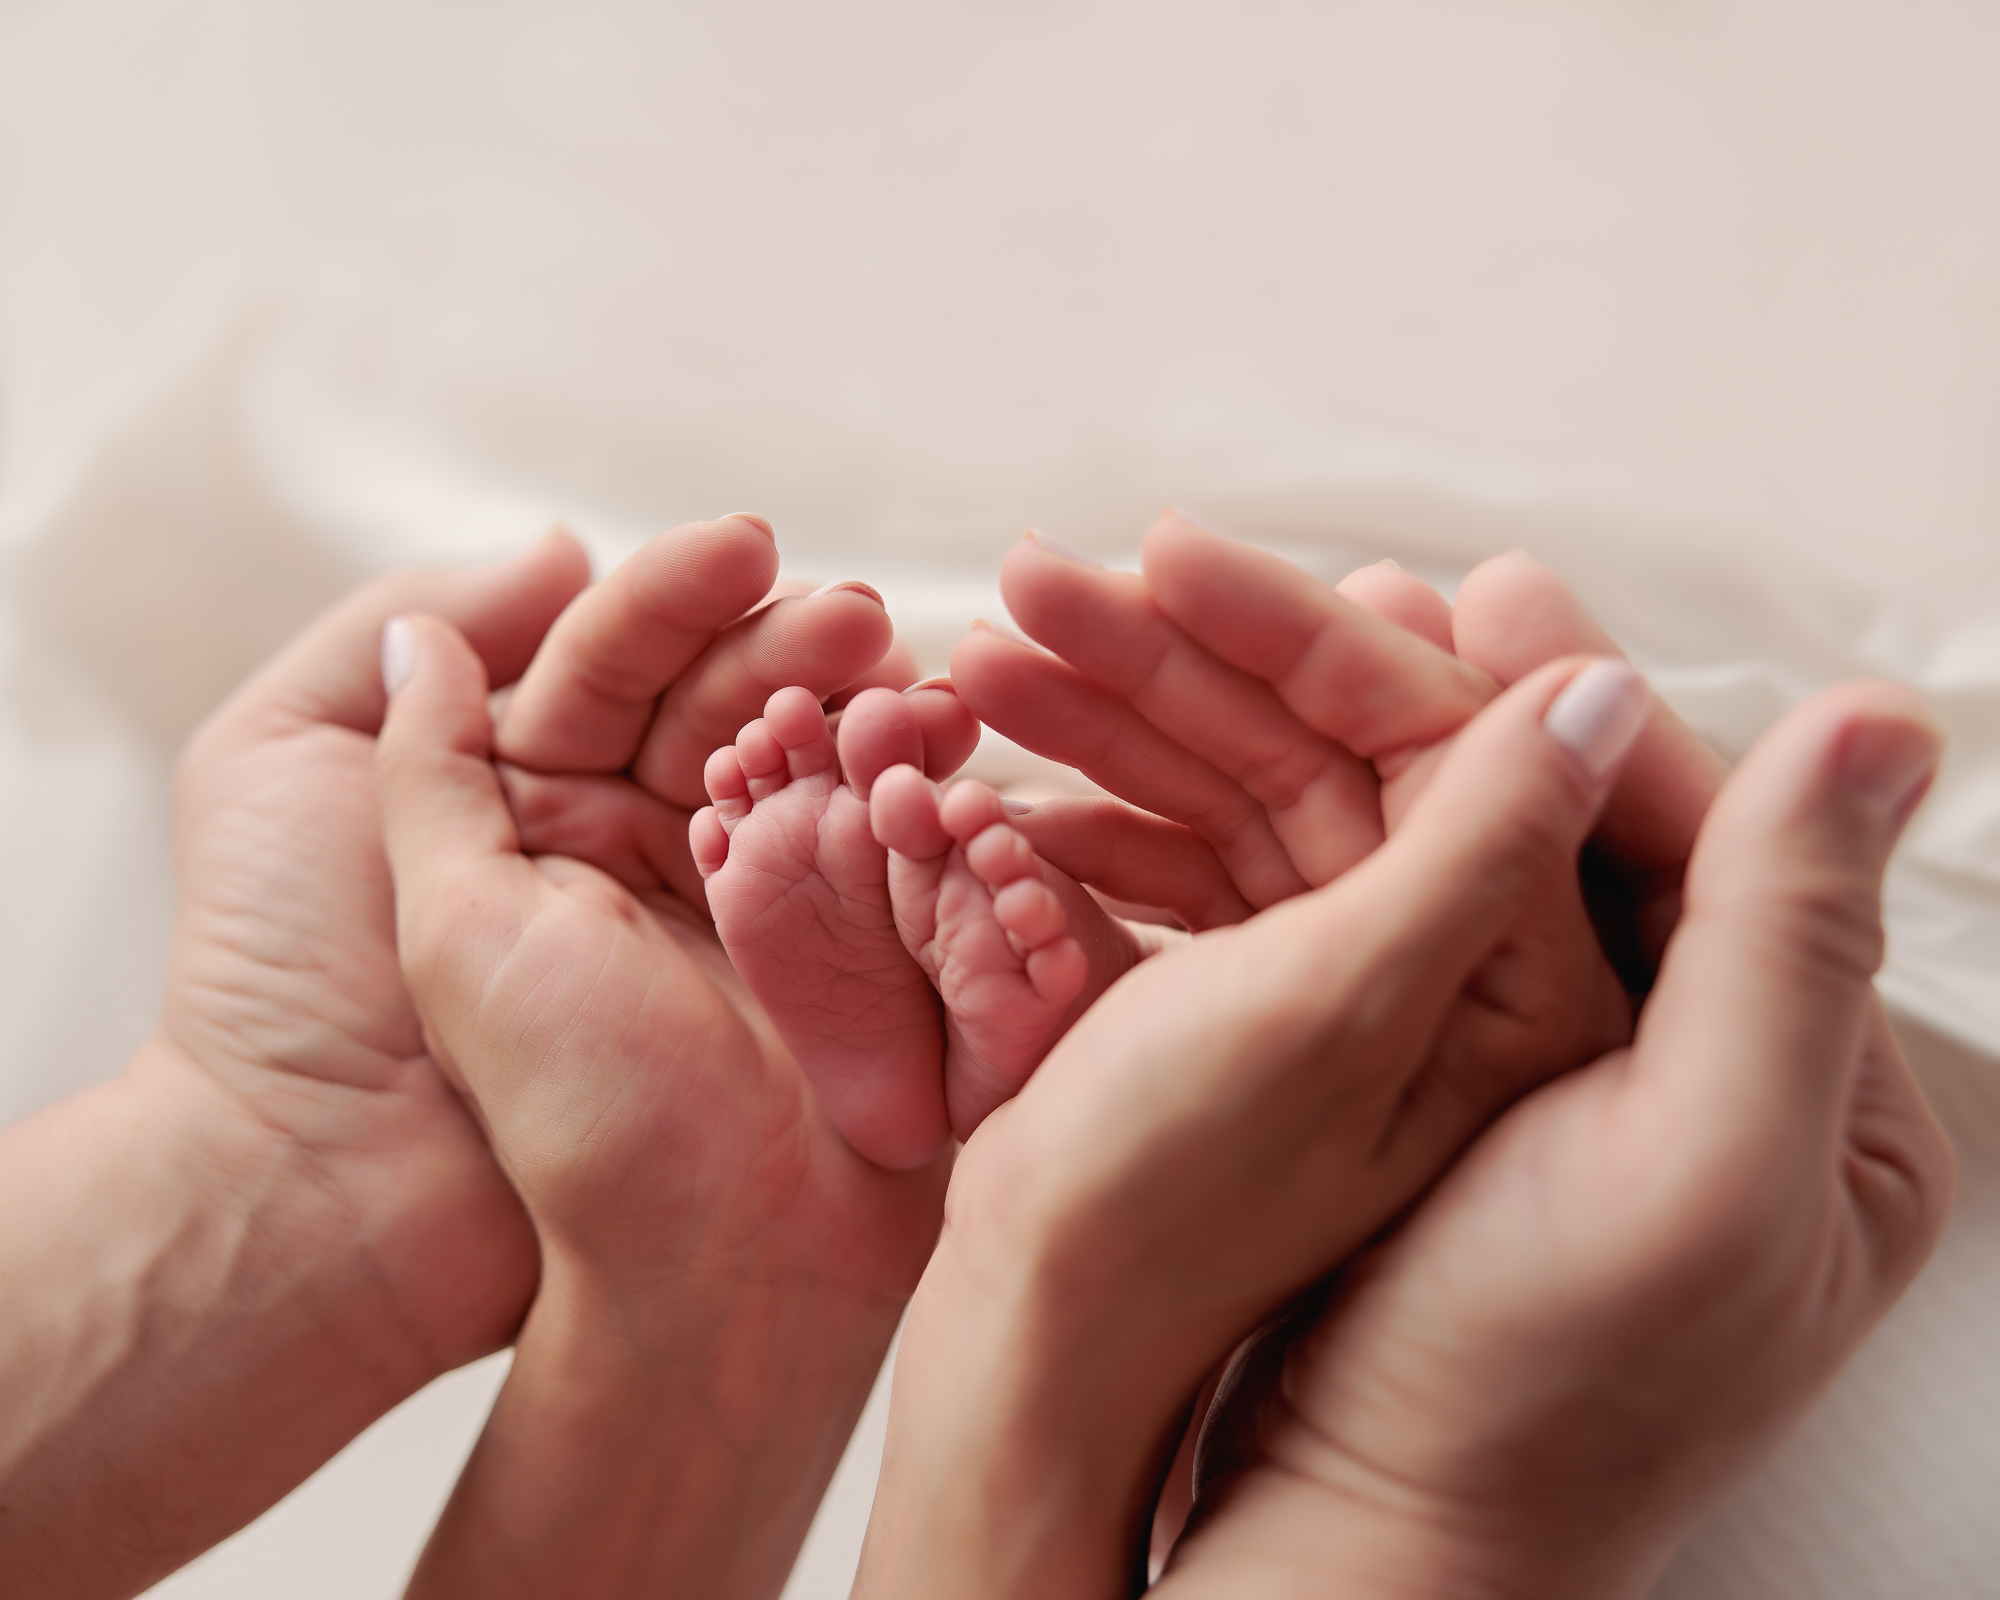 Amanda Dams Newborn Photography Baby Feet Parents Hands